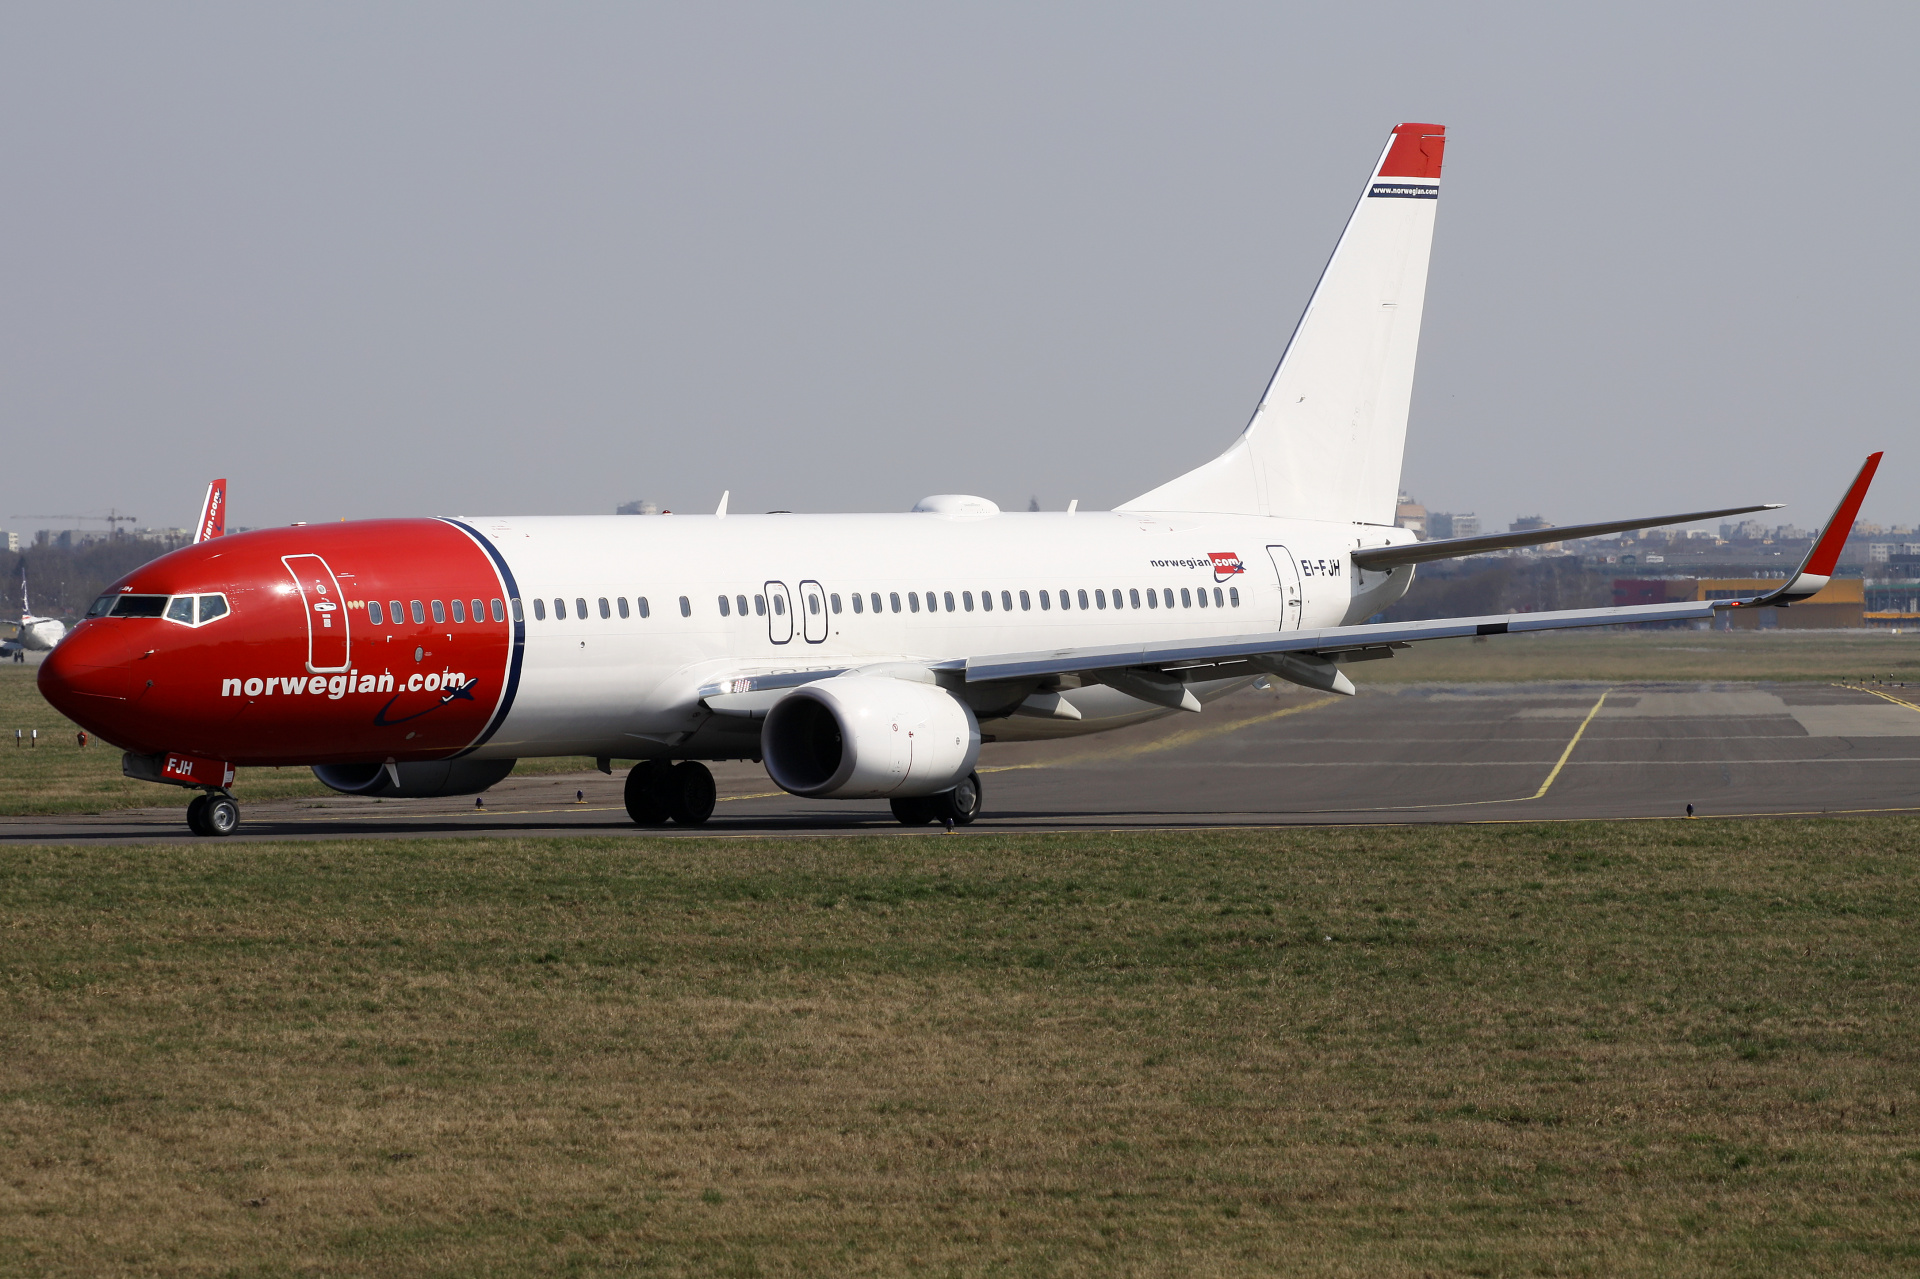 EI-FJH, Norwegian Air International (Aircraft » EPWA Spotting » Boeing 737-800 » Norwegian Air)